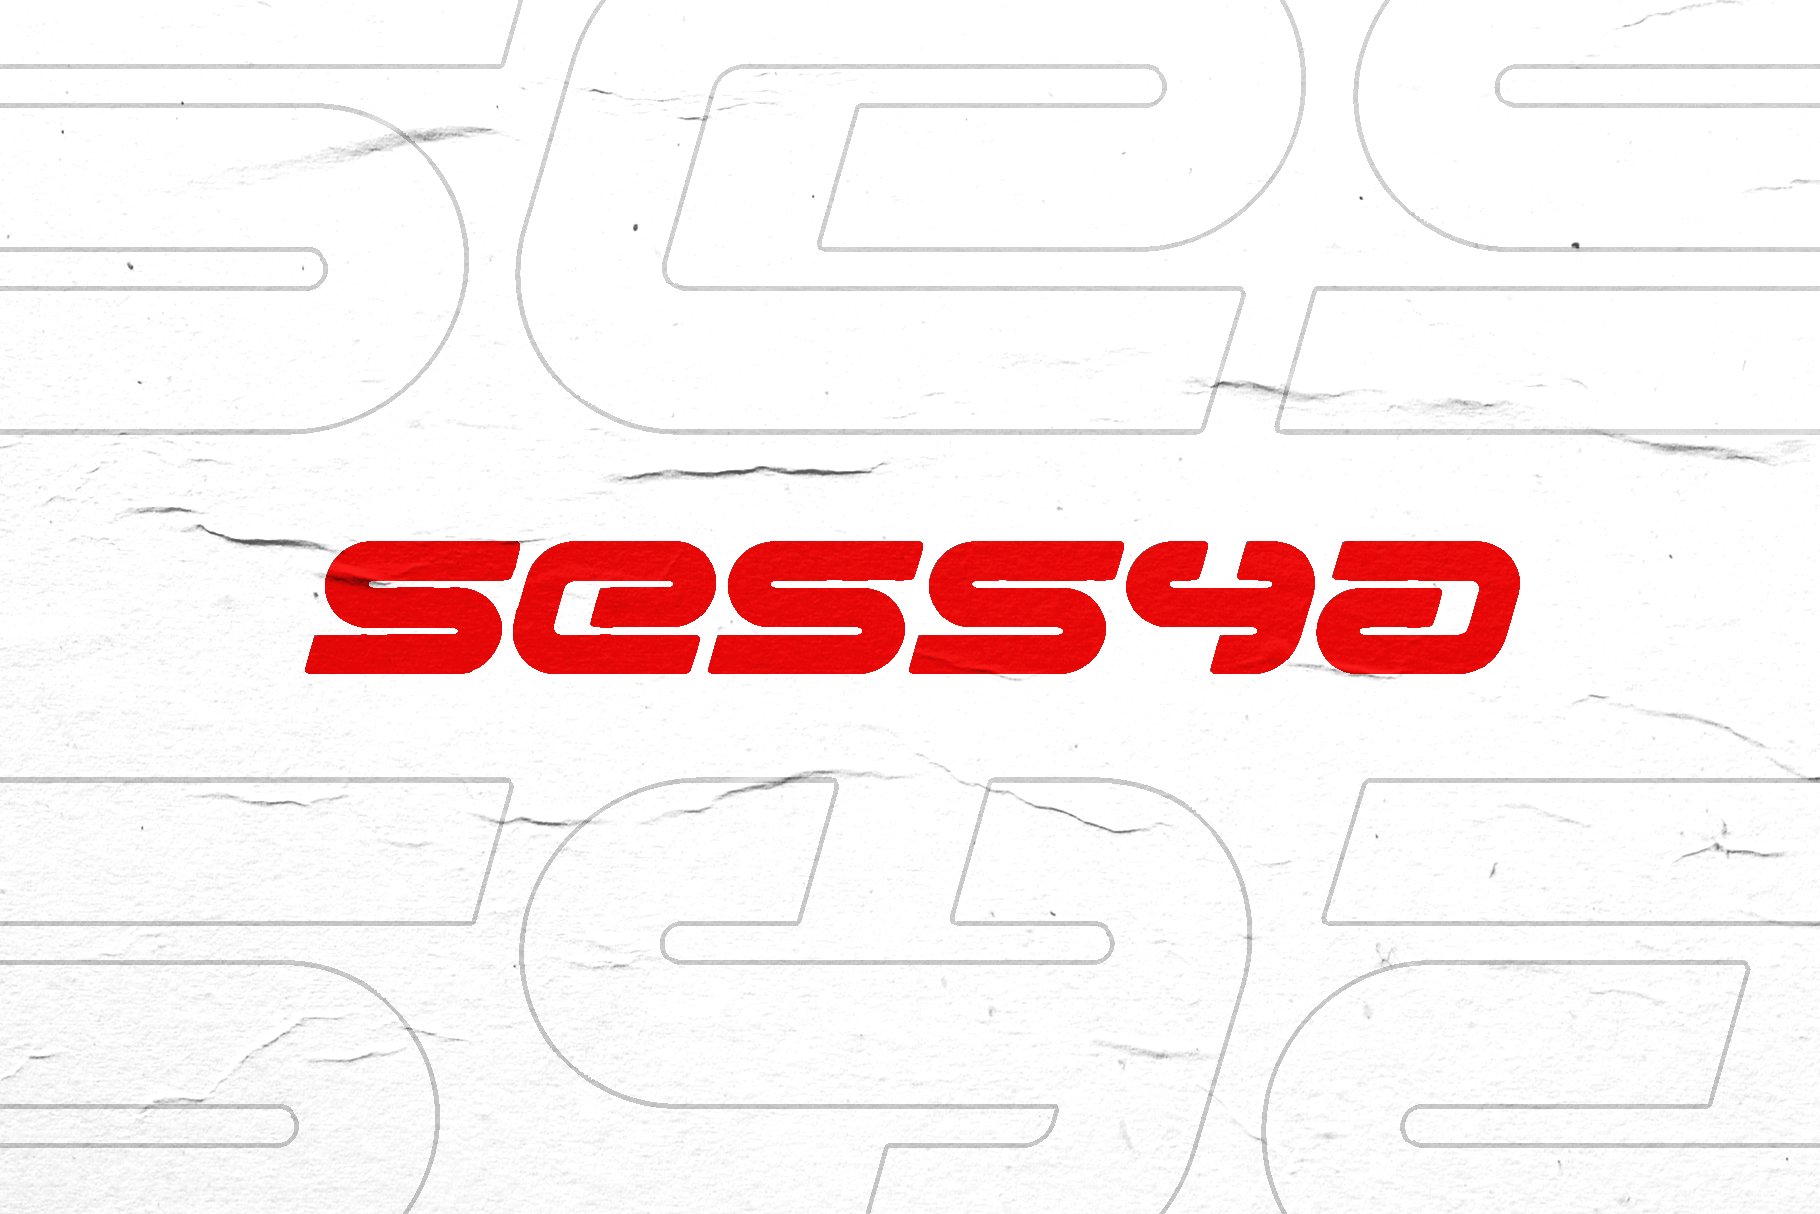 Sessya - Futuristic Sci-Fi Typeface cover image.